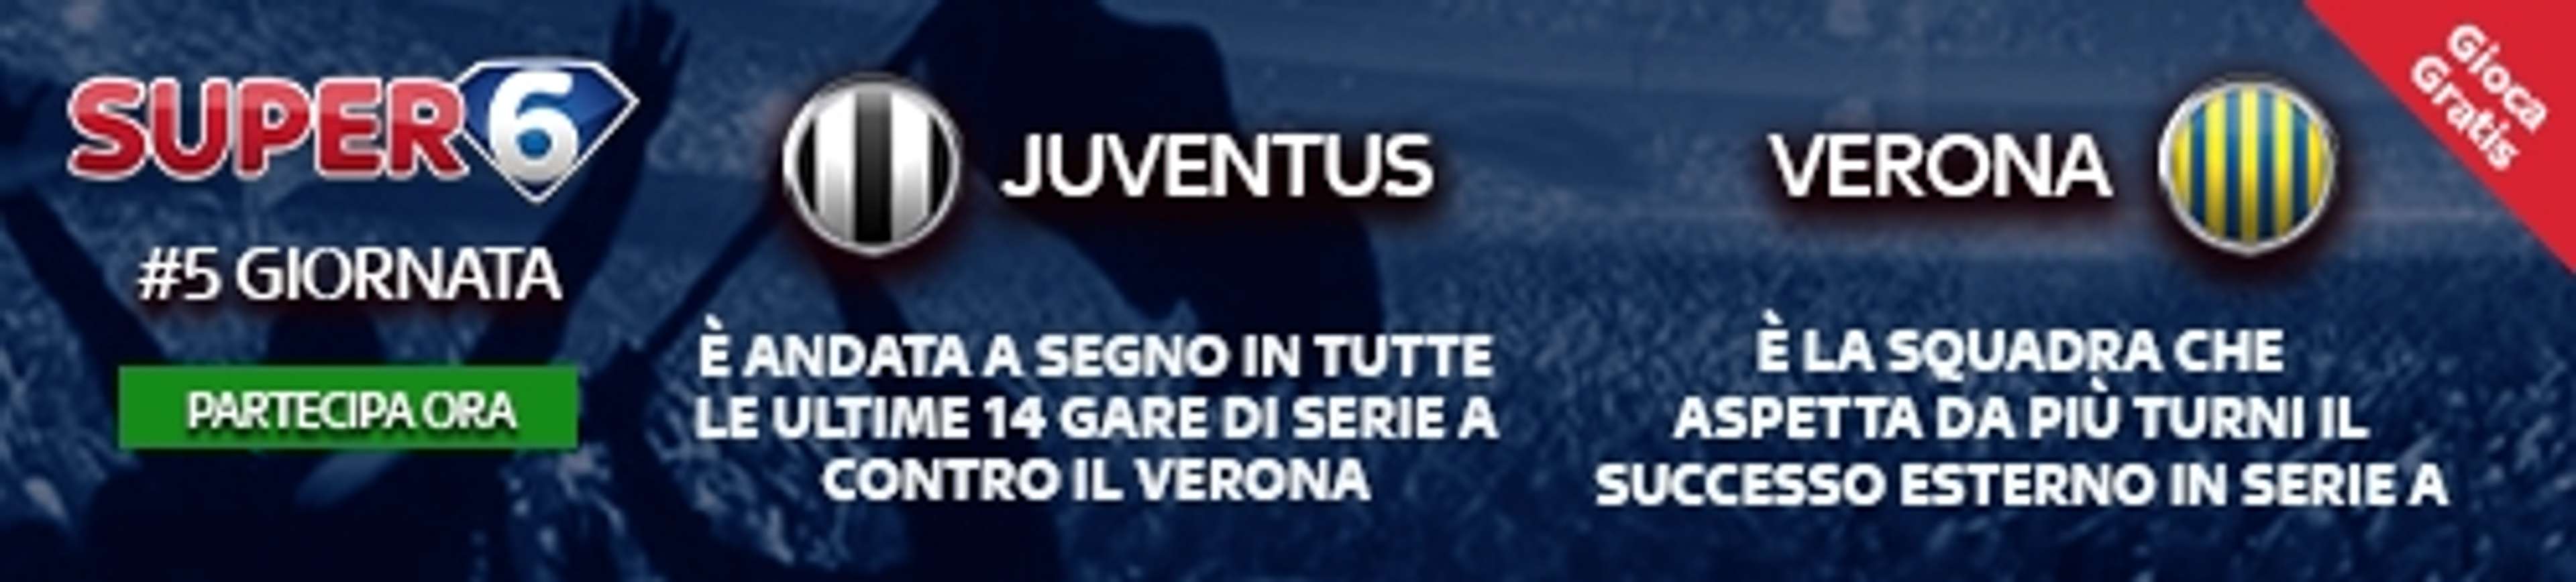 Super6 - 5 - JuventusVerona